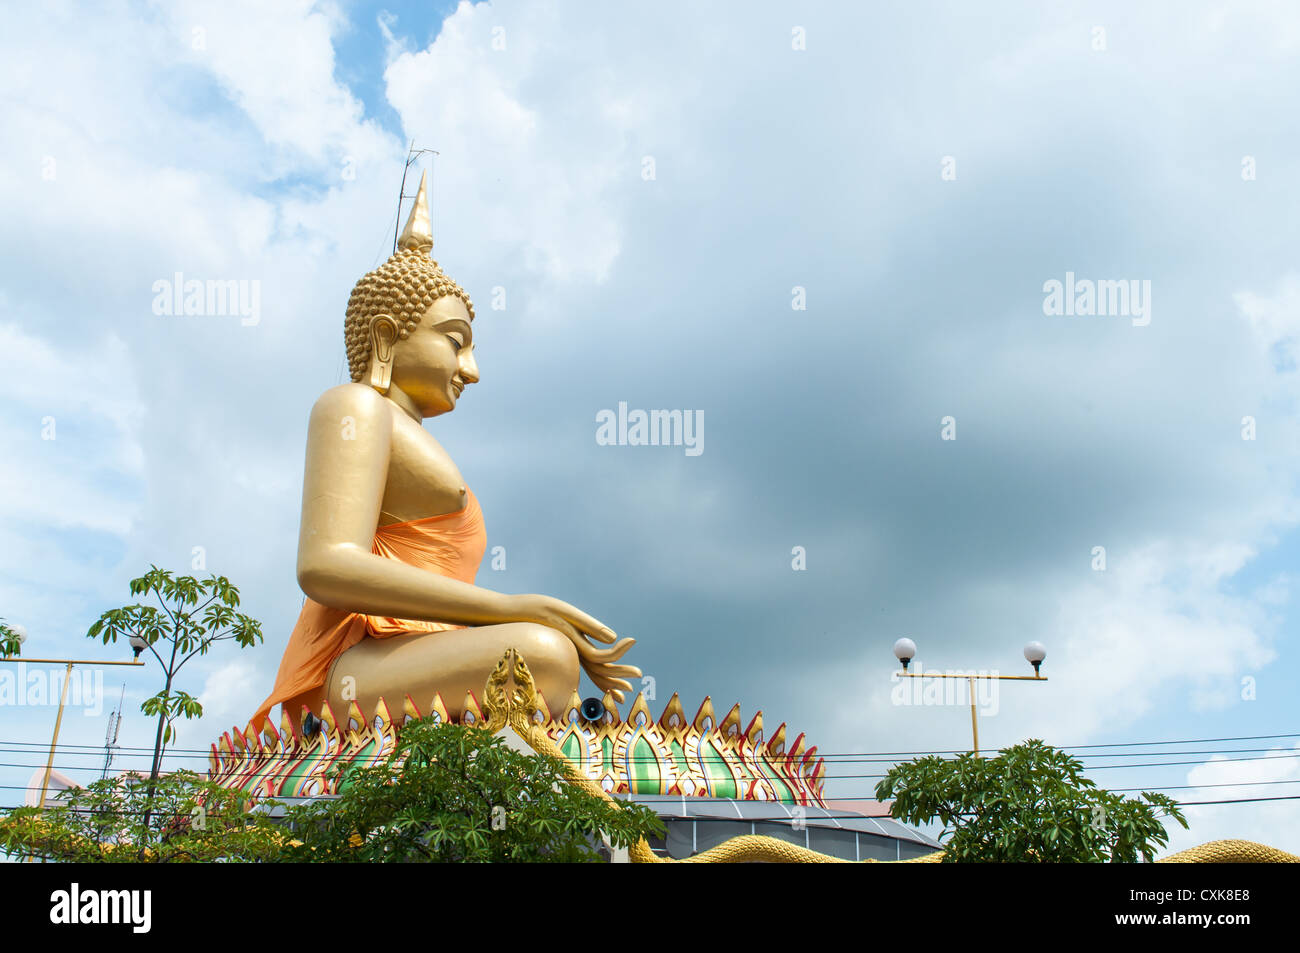 Big Buddha image. Stock Photo